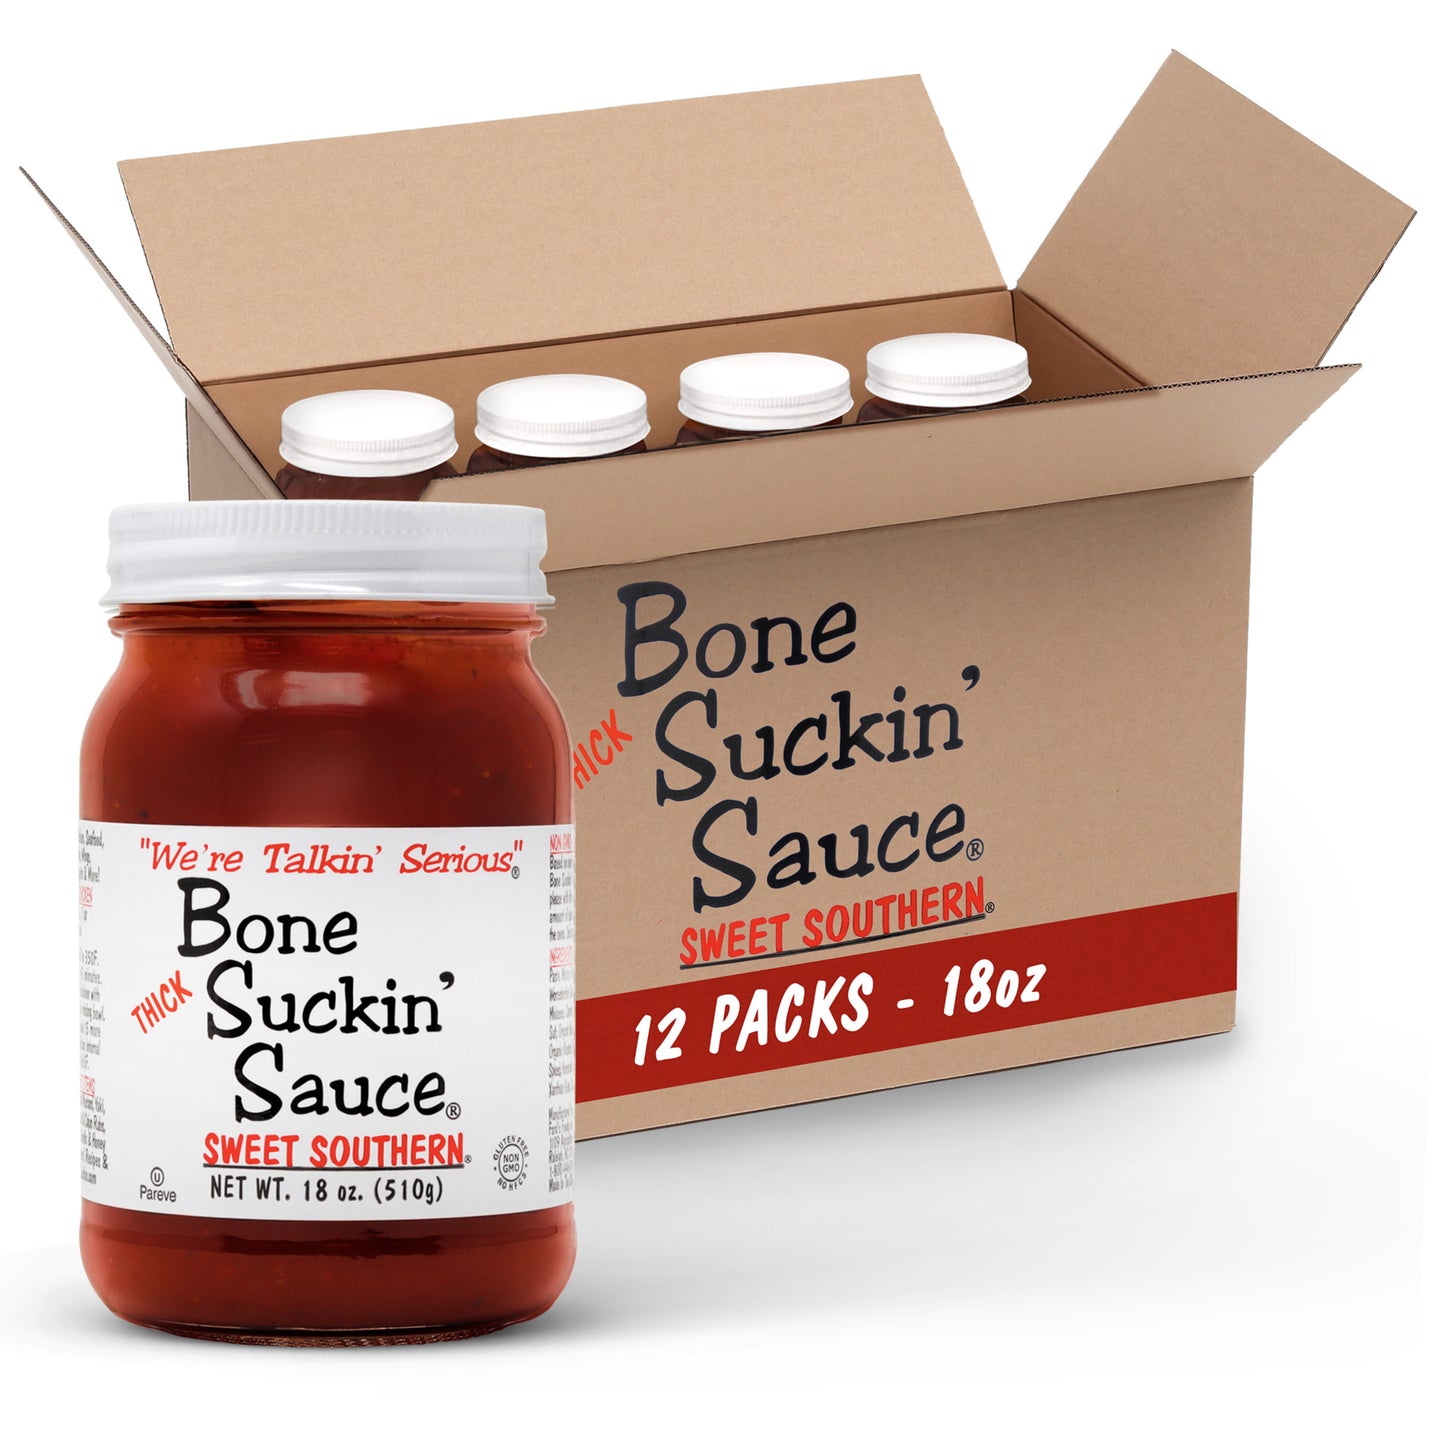 Bone Suckin' Sauce®, Thick Sweet Southern®, 12 pack